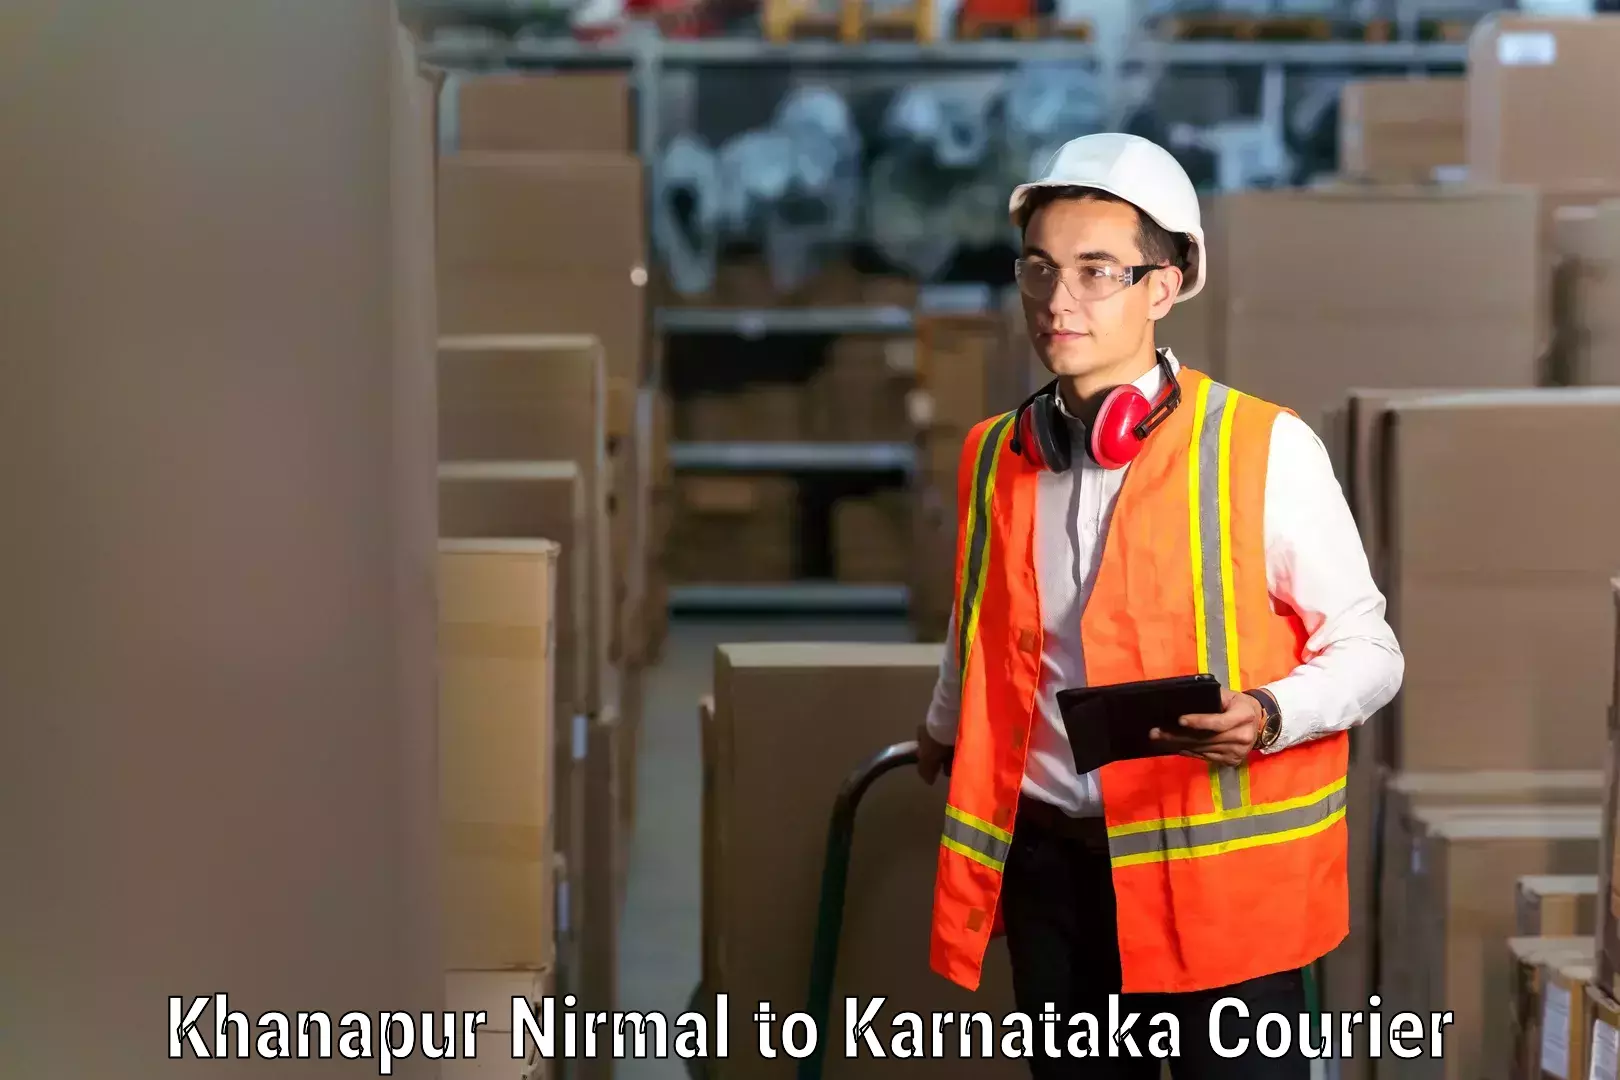 Furniture delivery service Khanapur Nirmal to Madhugiri